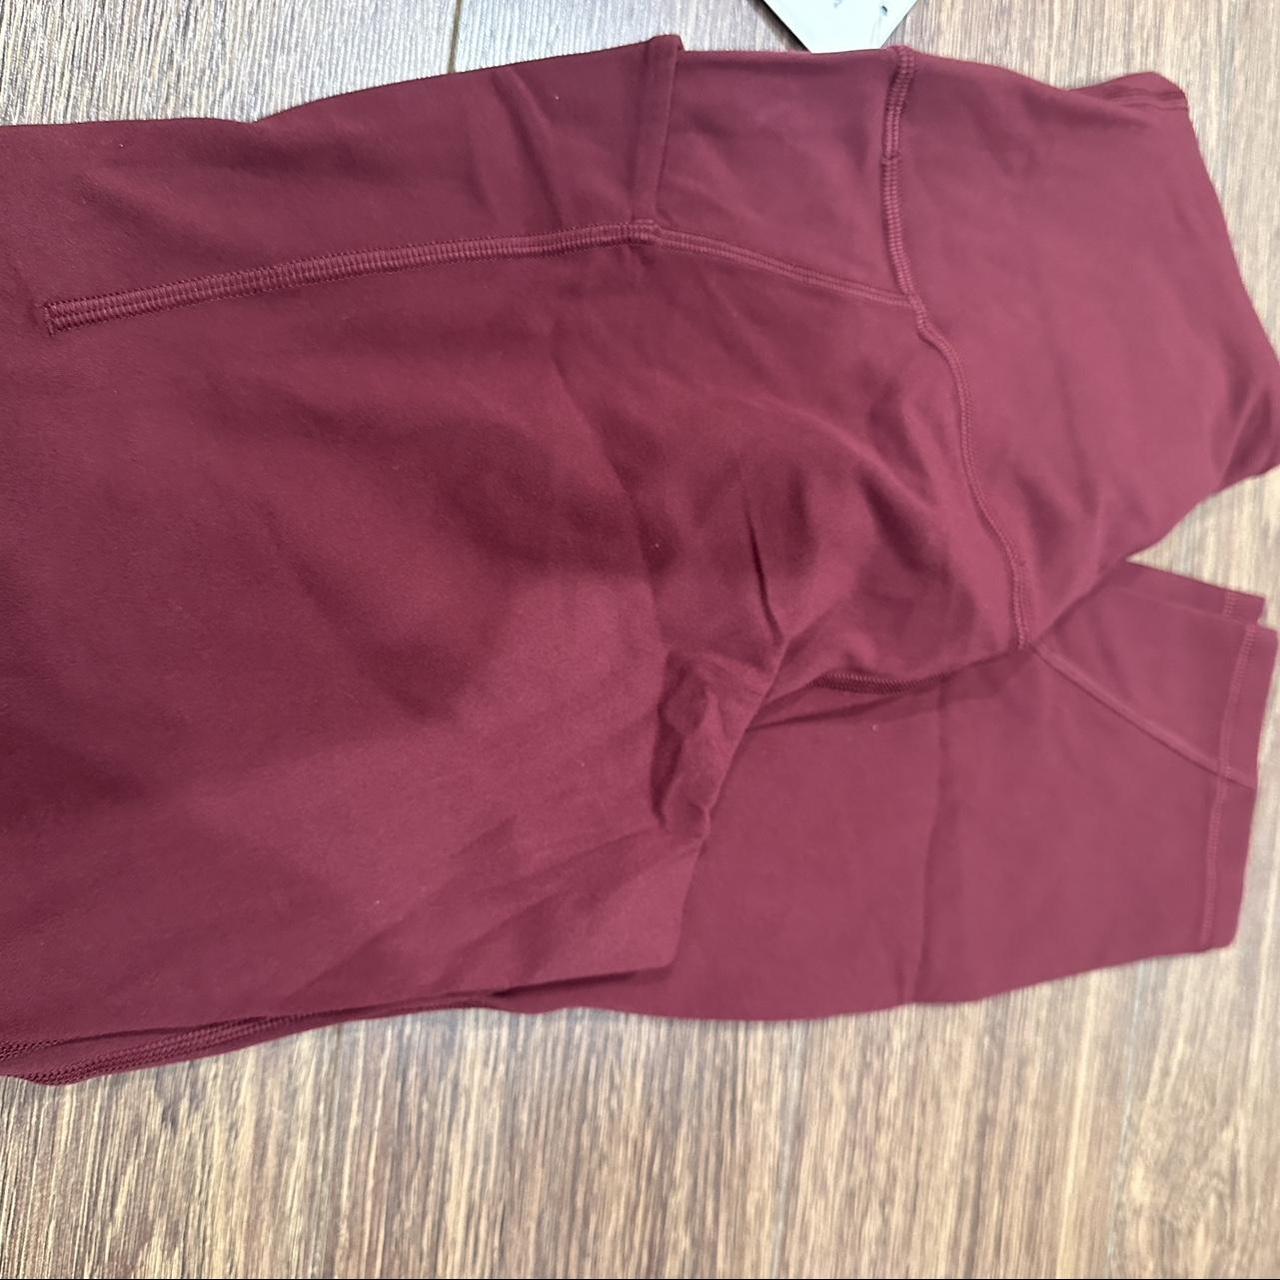 New. Red merlot lululemon align with pockets. Size - Depop